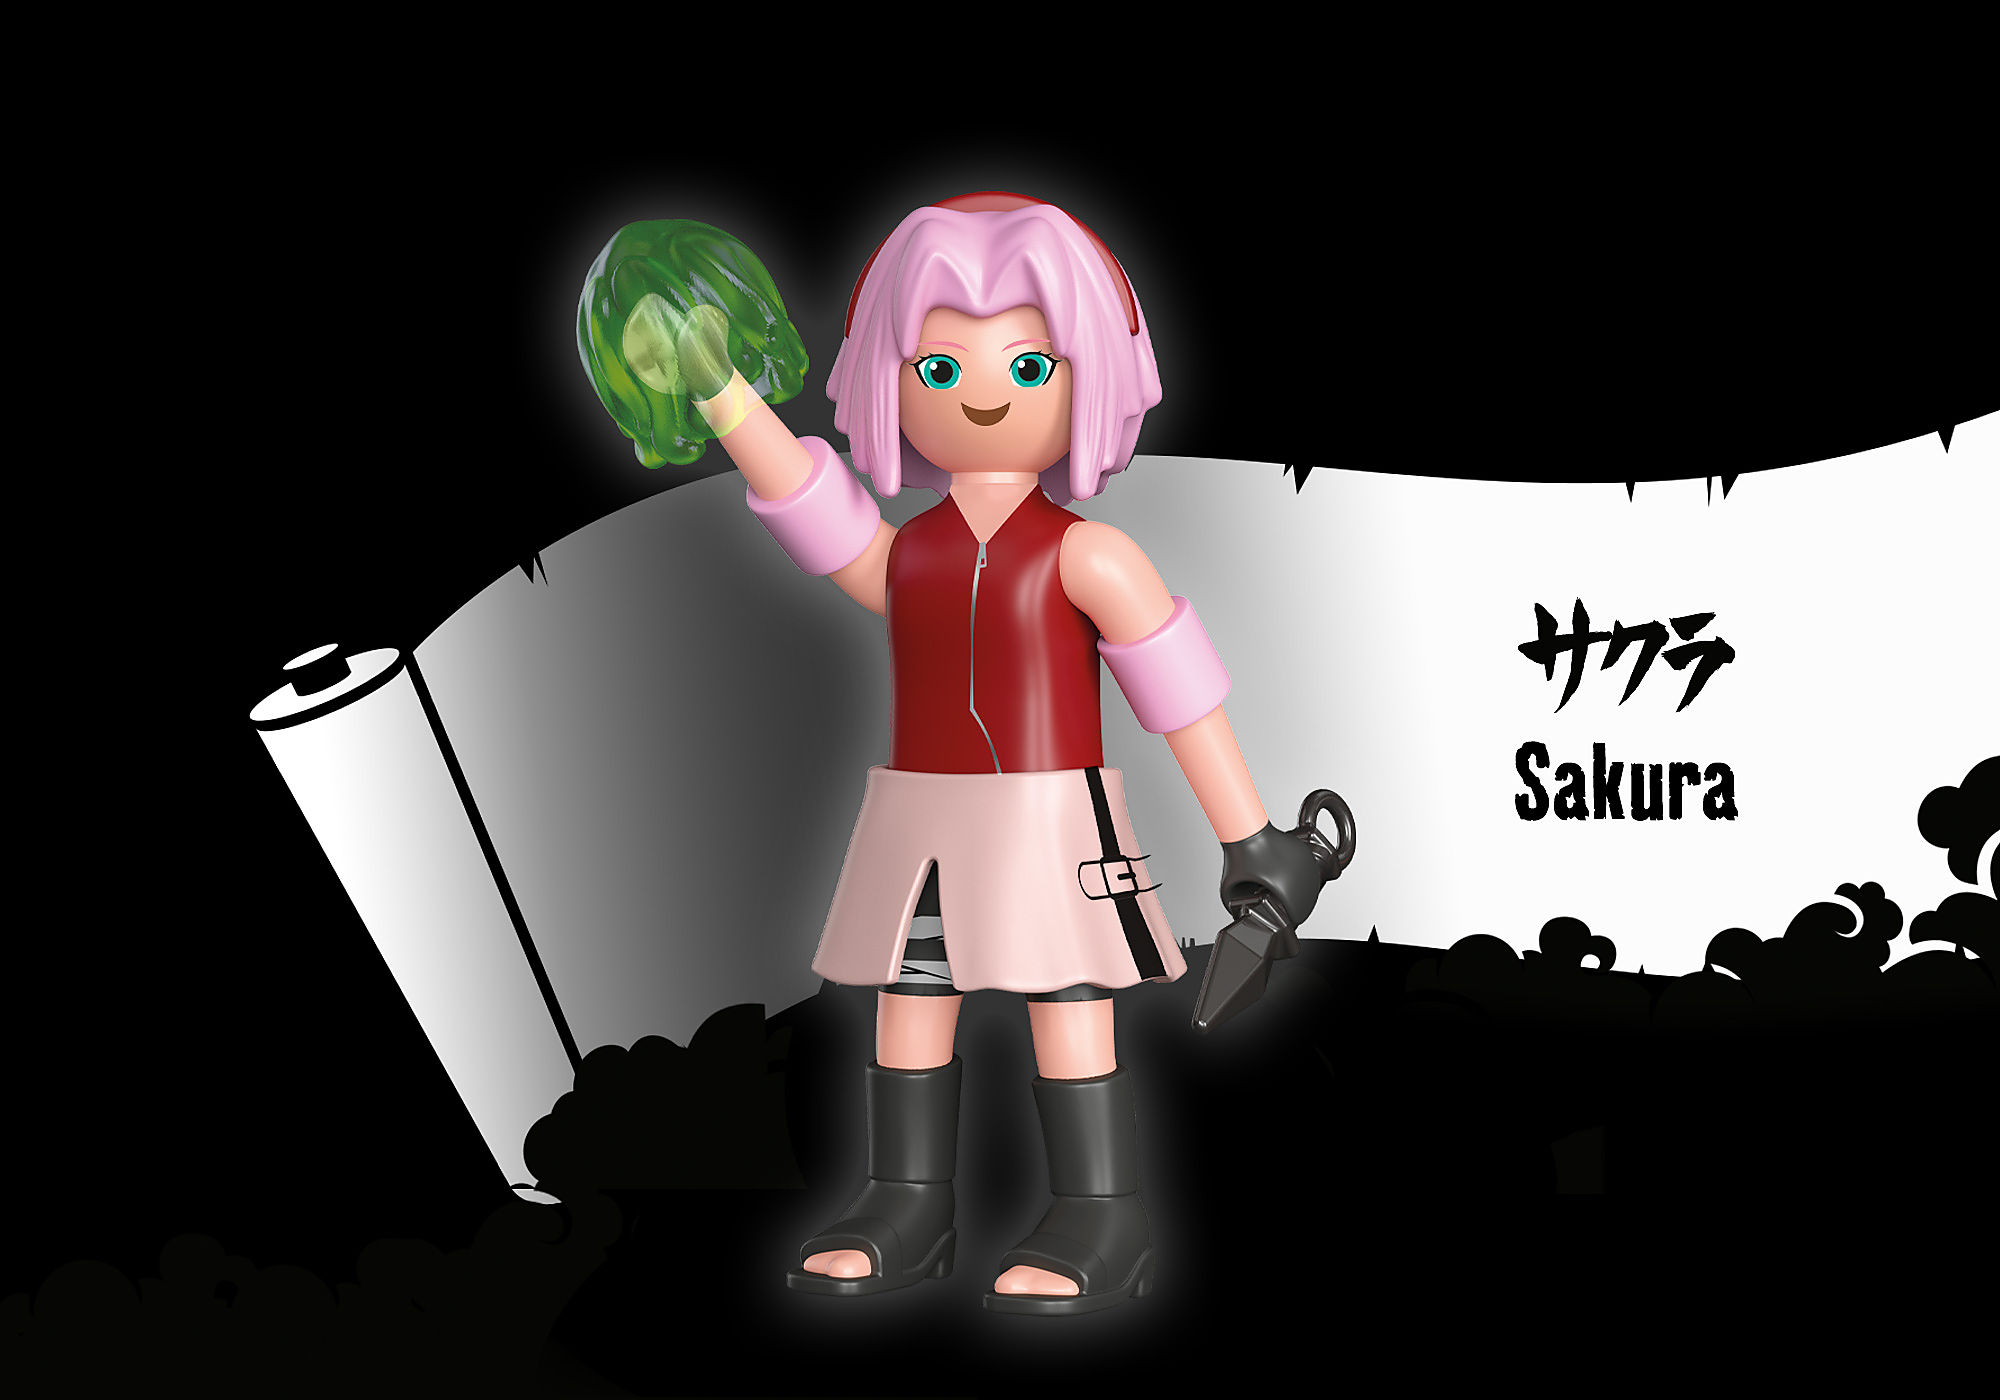 Fan art) Naruto - Haruno Sakura 1 by BNJacob on DeviantArt